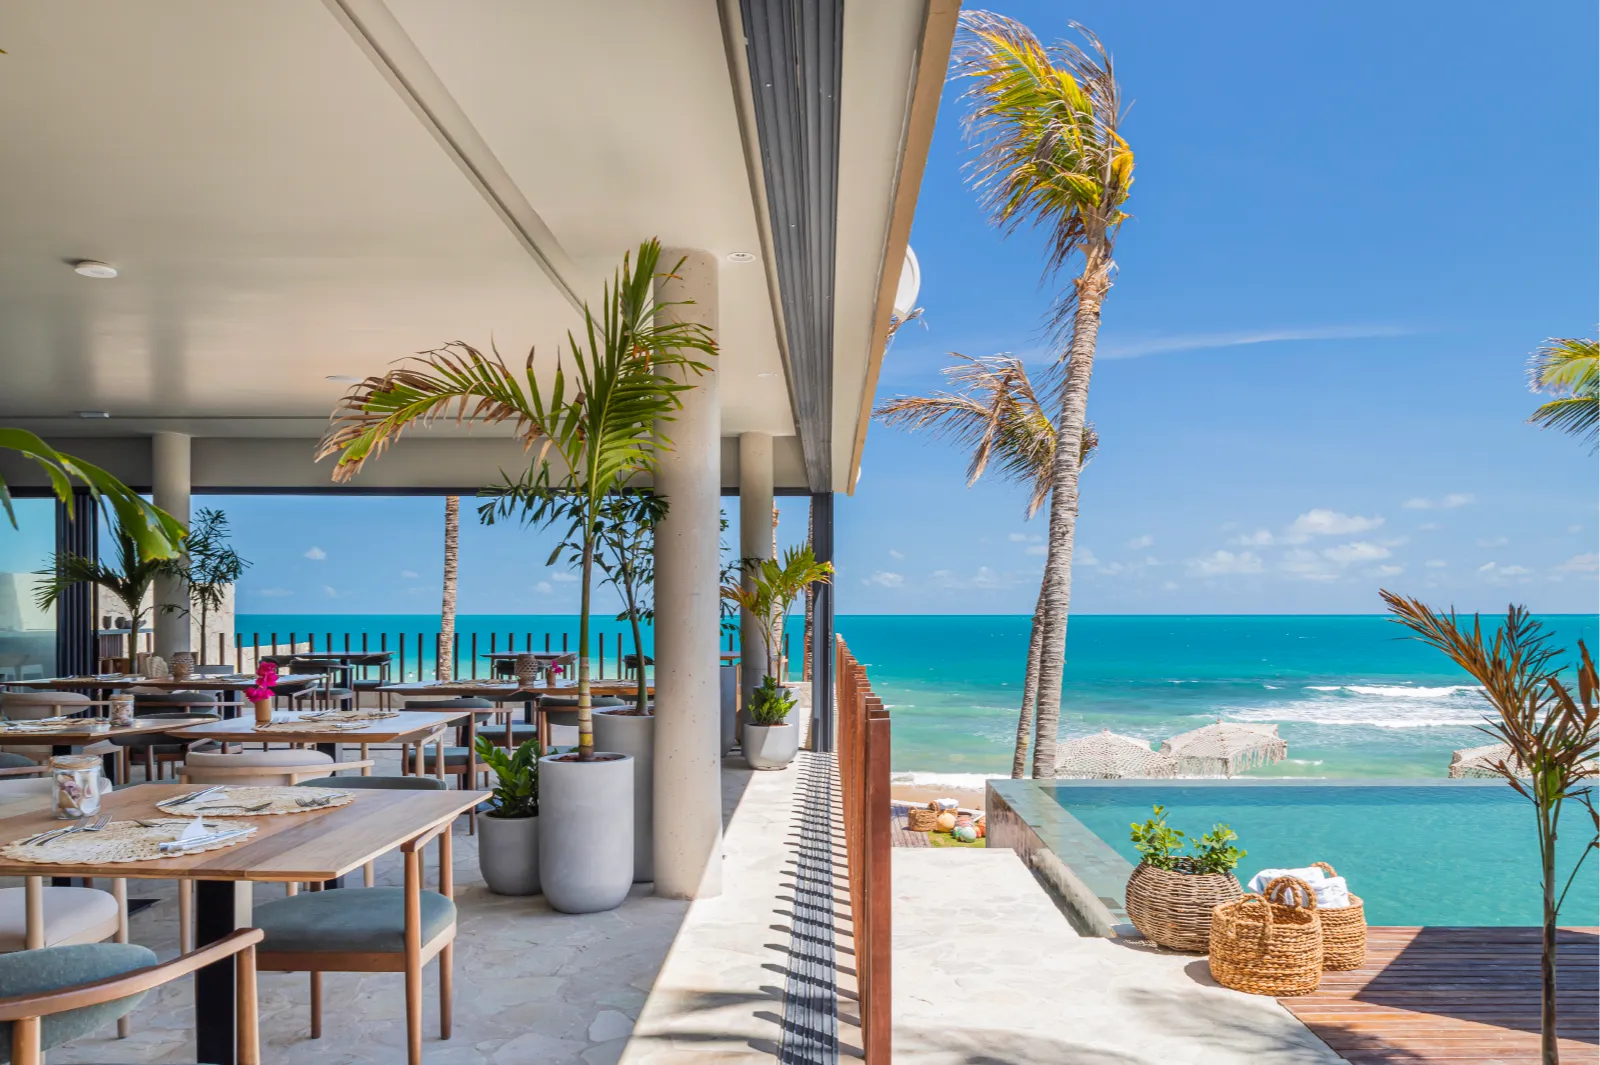 Saline Taíba Boutique Beach Hotel promove experiência gastronômica especial